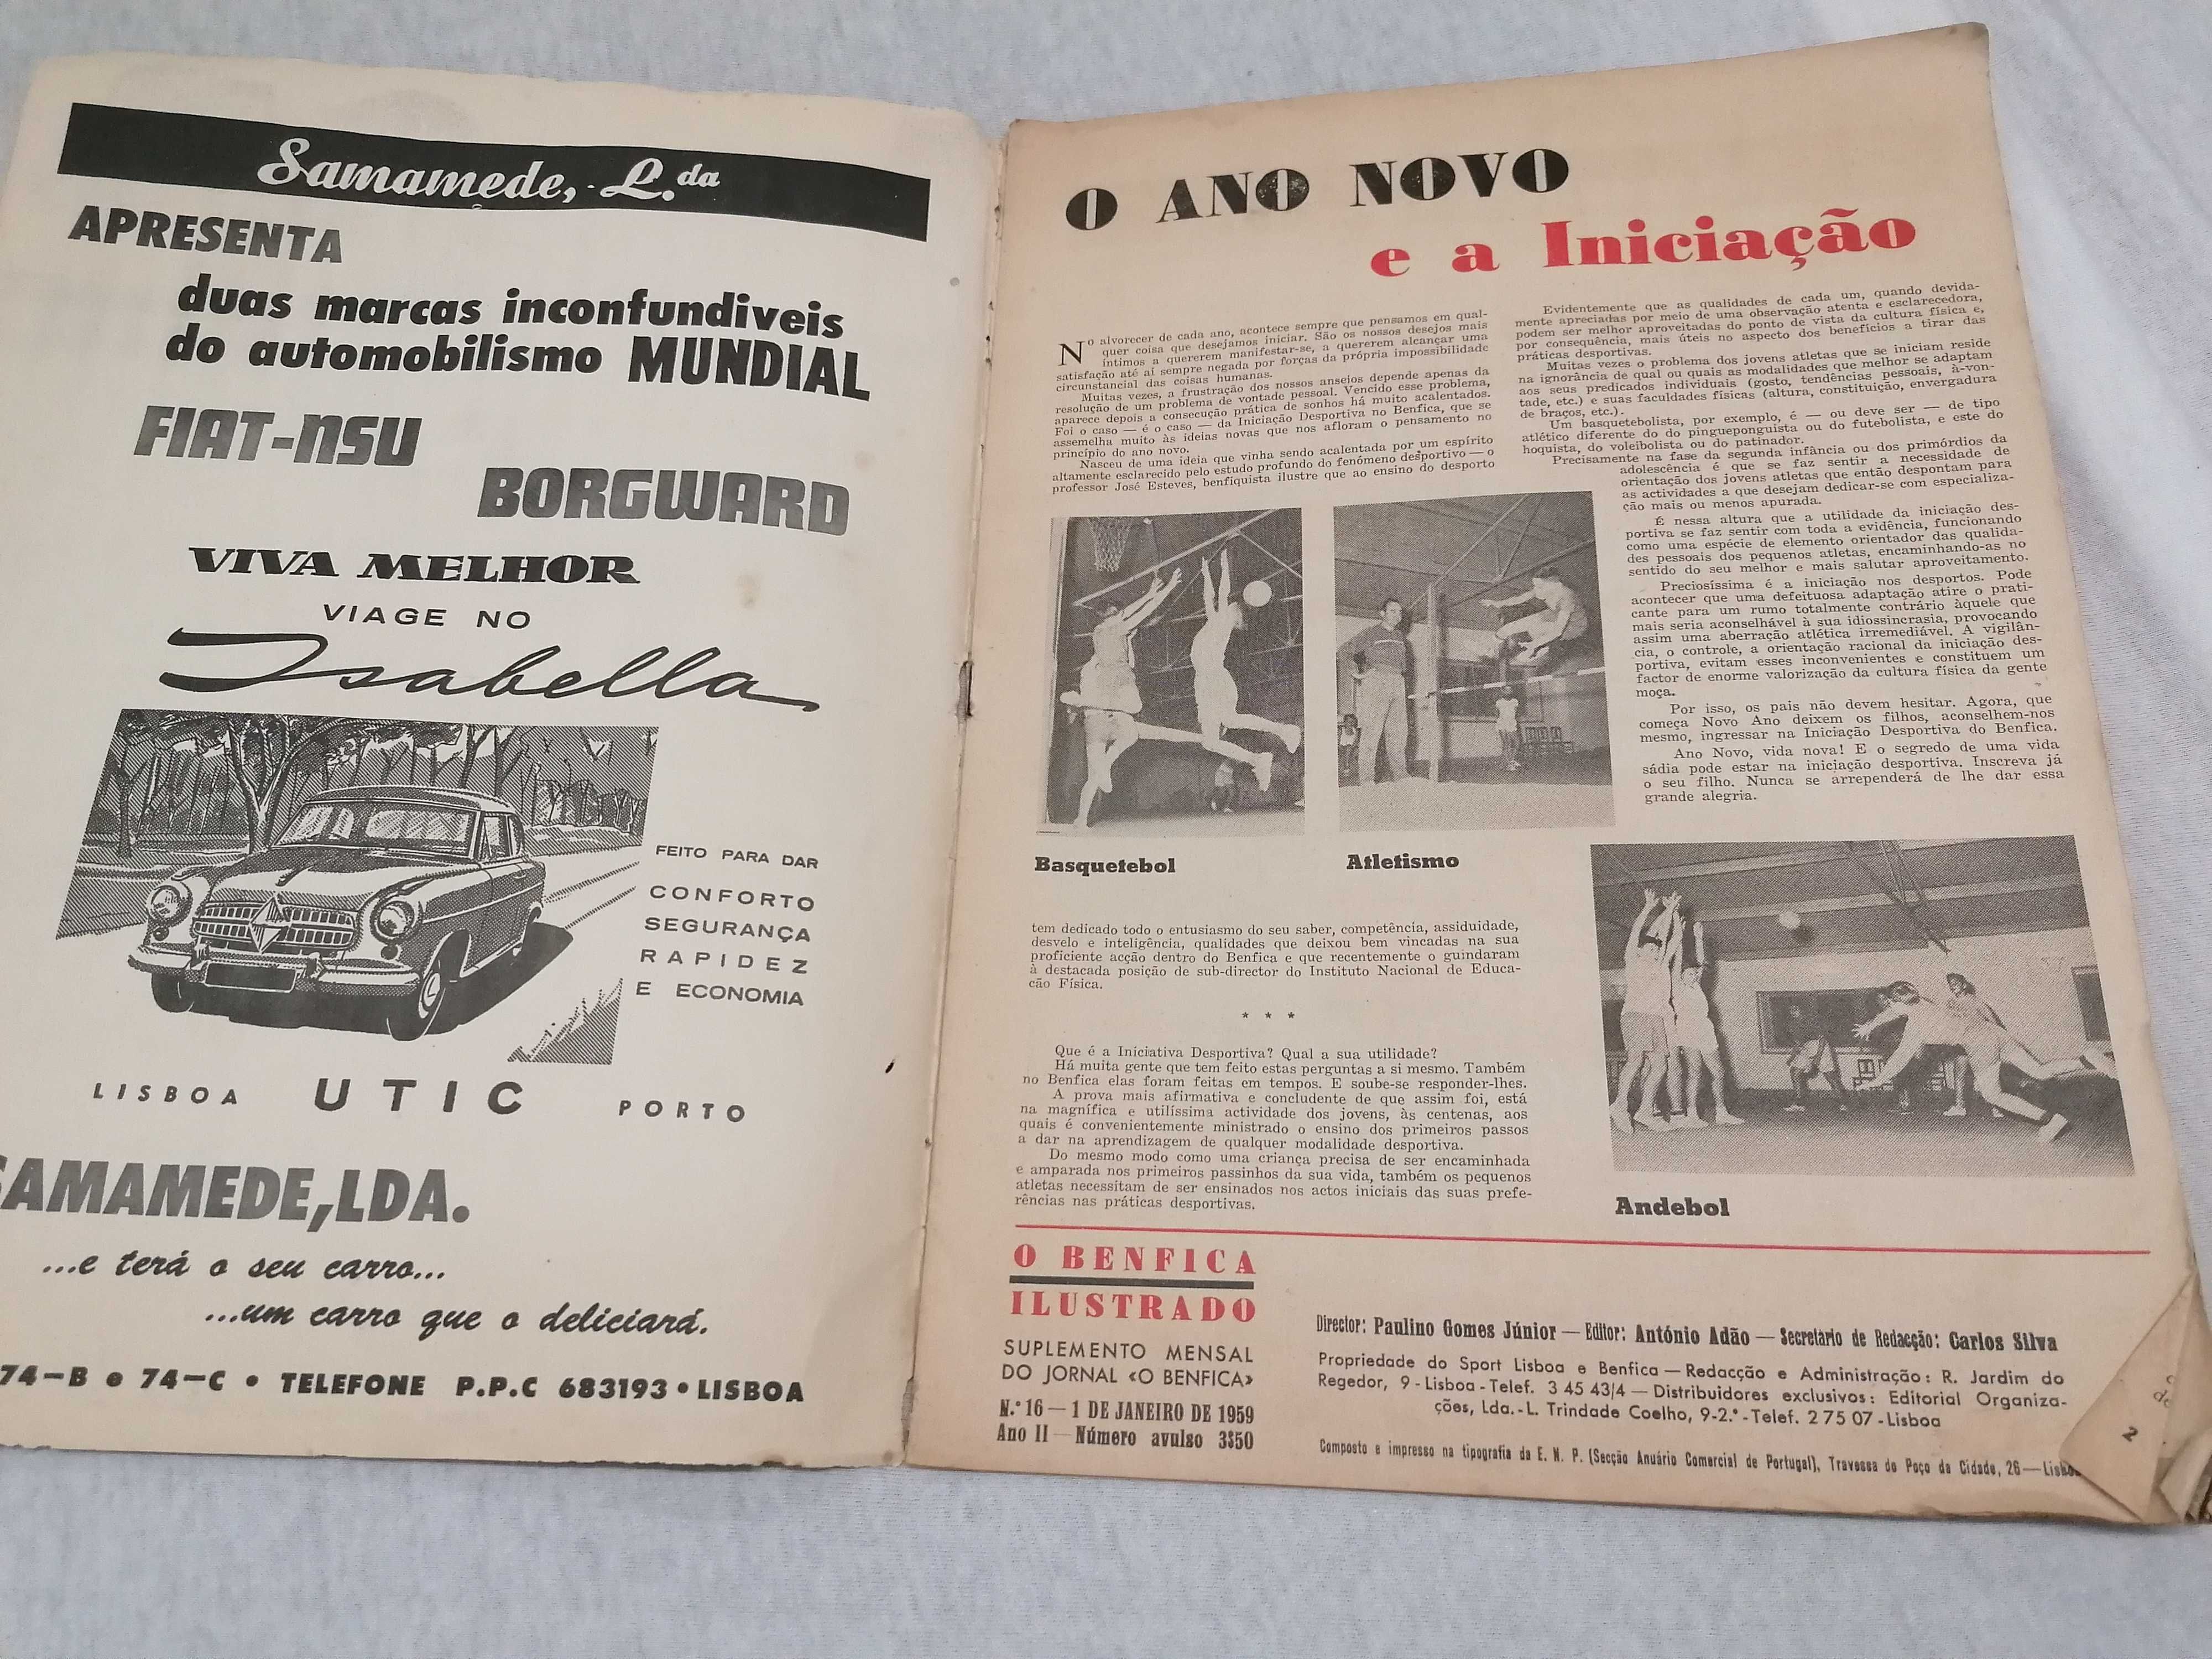 Revista "O benfica", Janeiro 1959, nº 16,  vintage.